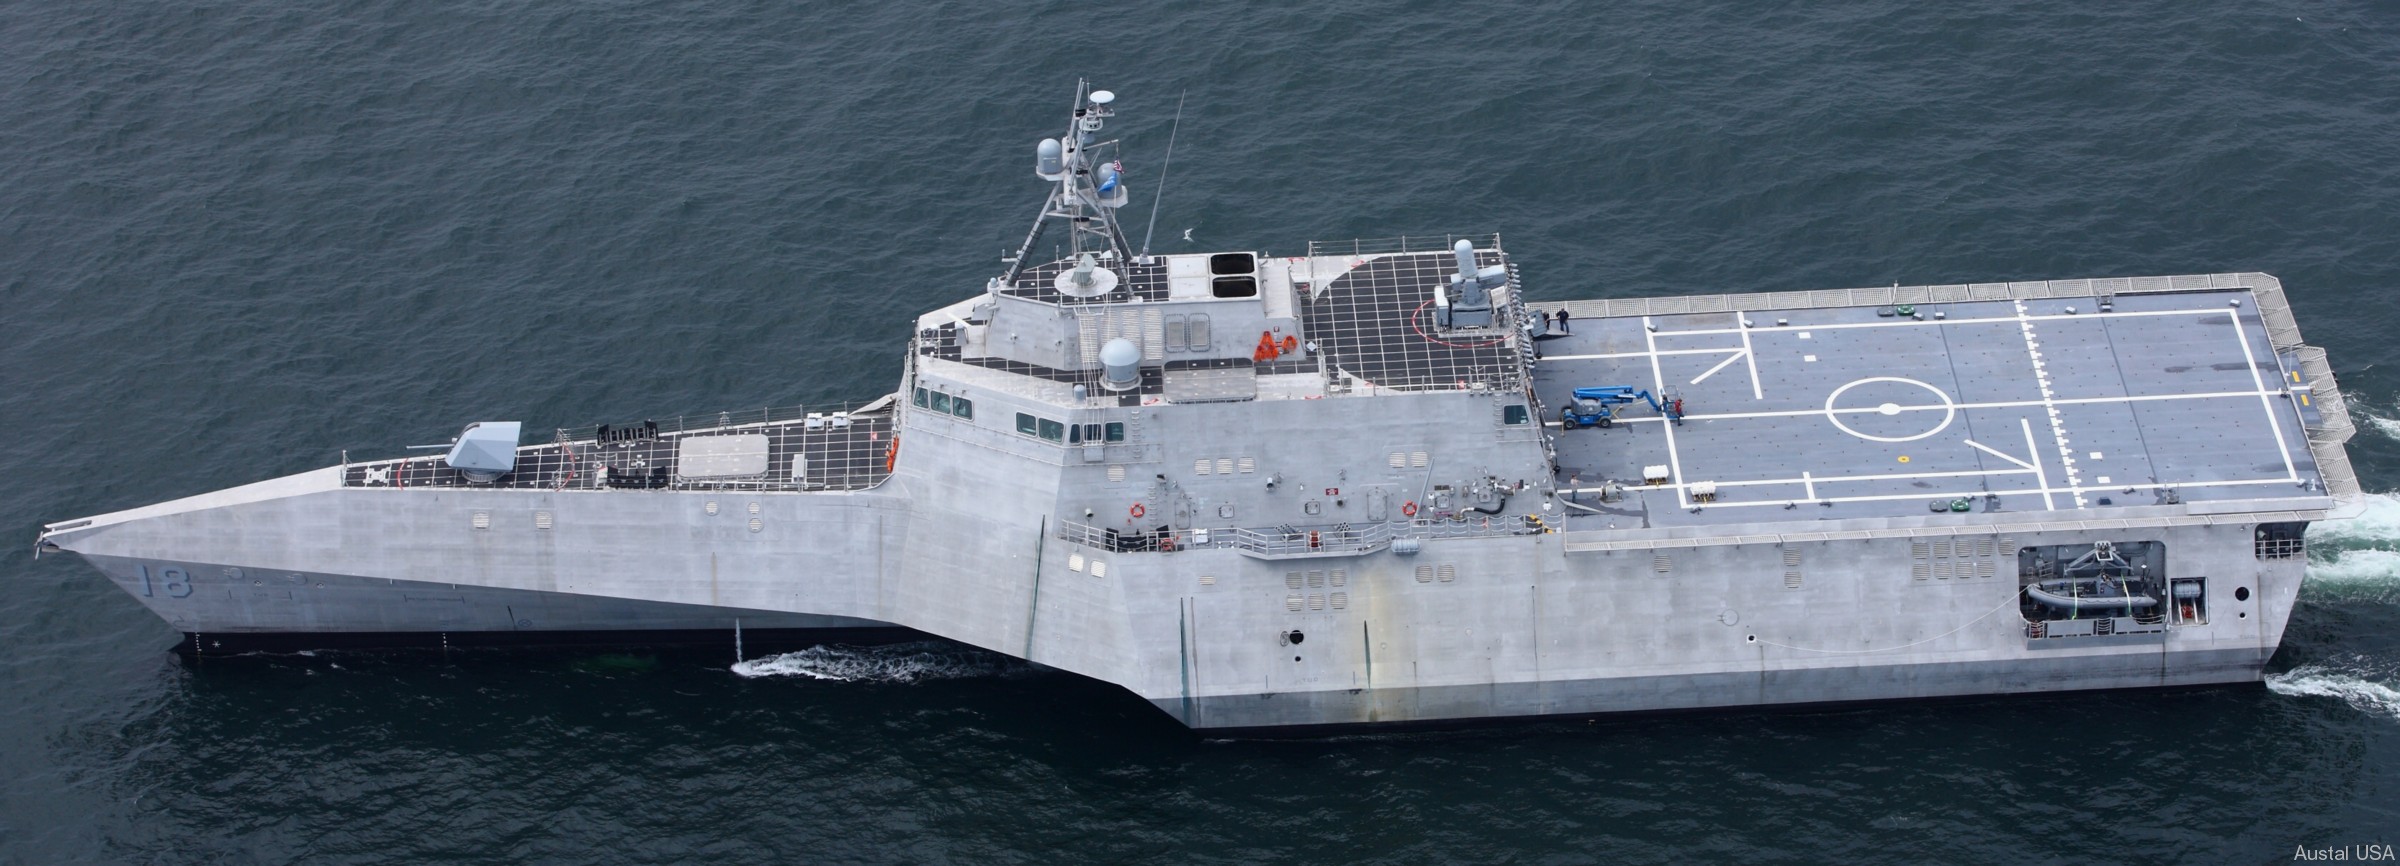 lcs-18 uss charleston independence class littoral combat ship us navy 17 trials austal usa